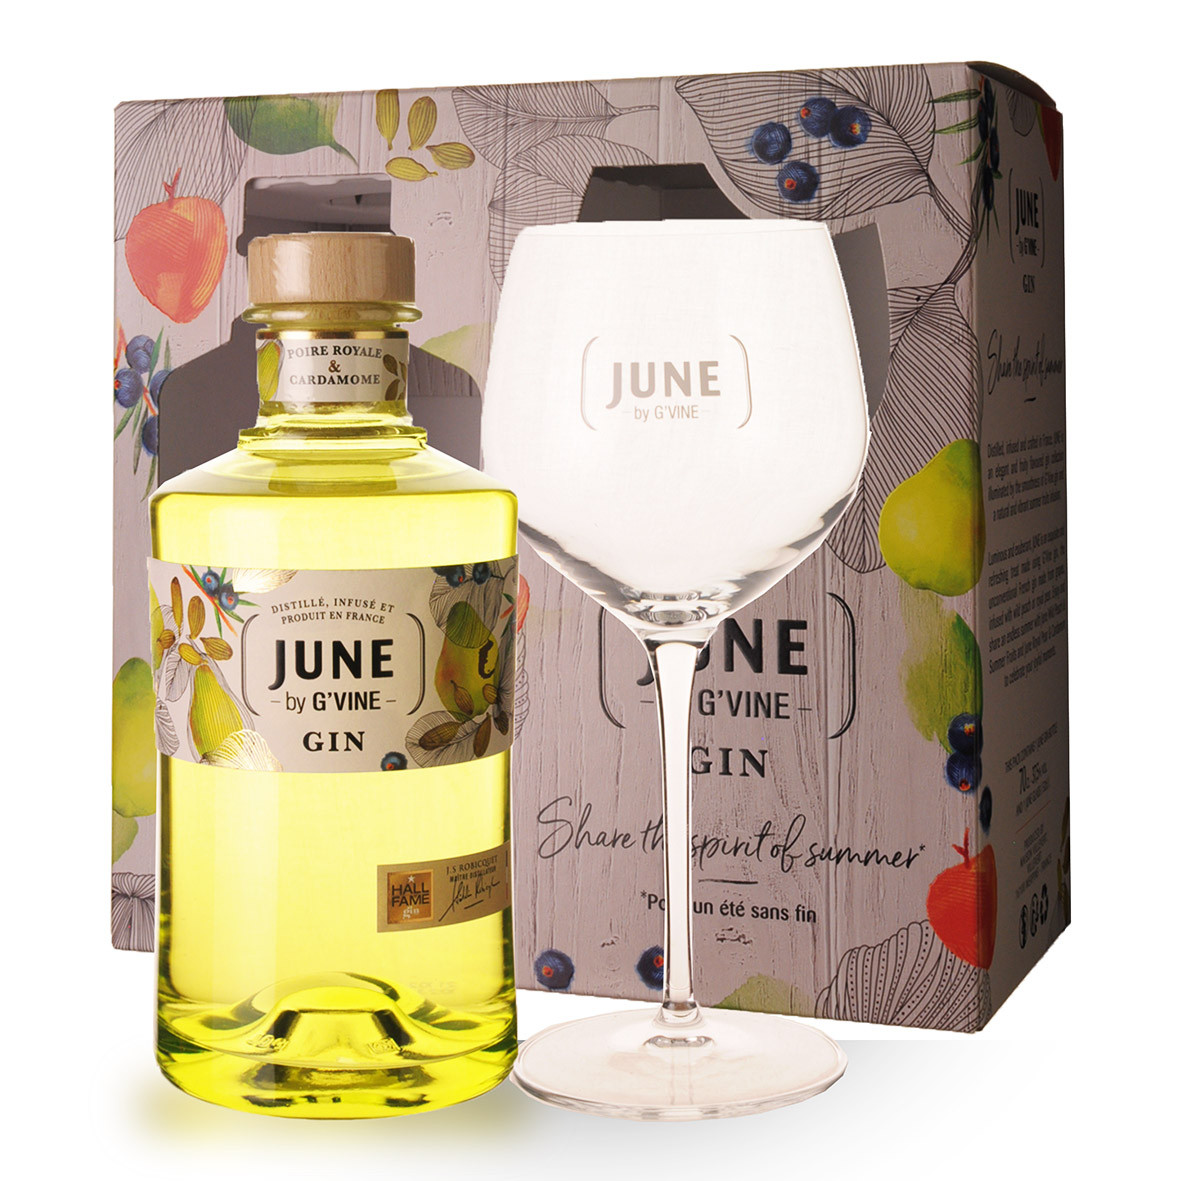 Gin June by Gvine Poire Royale et Gardamome 70cl Coffret 1 verre www.odyssee-vins.com